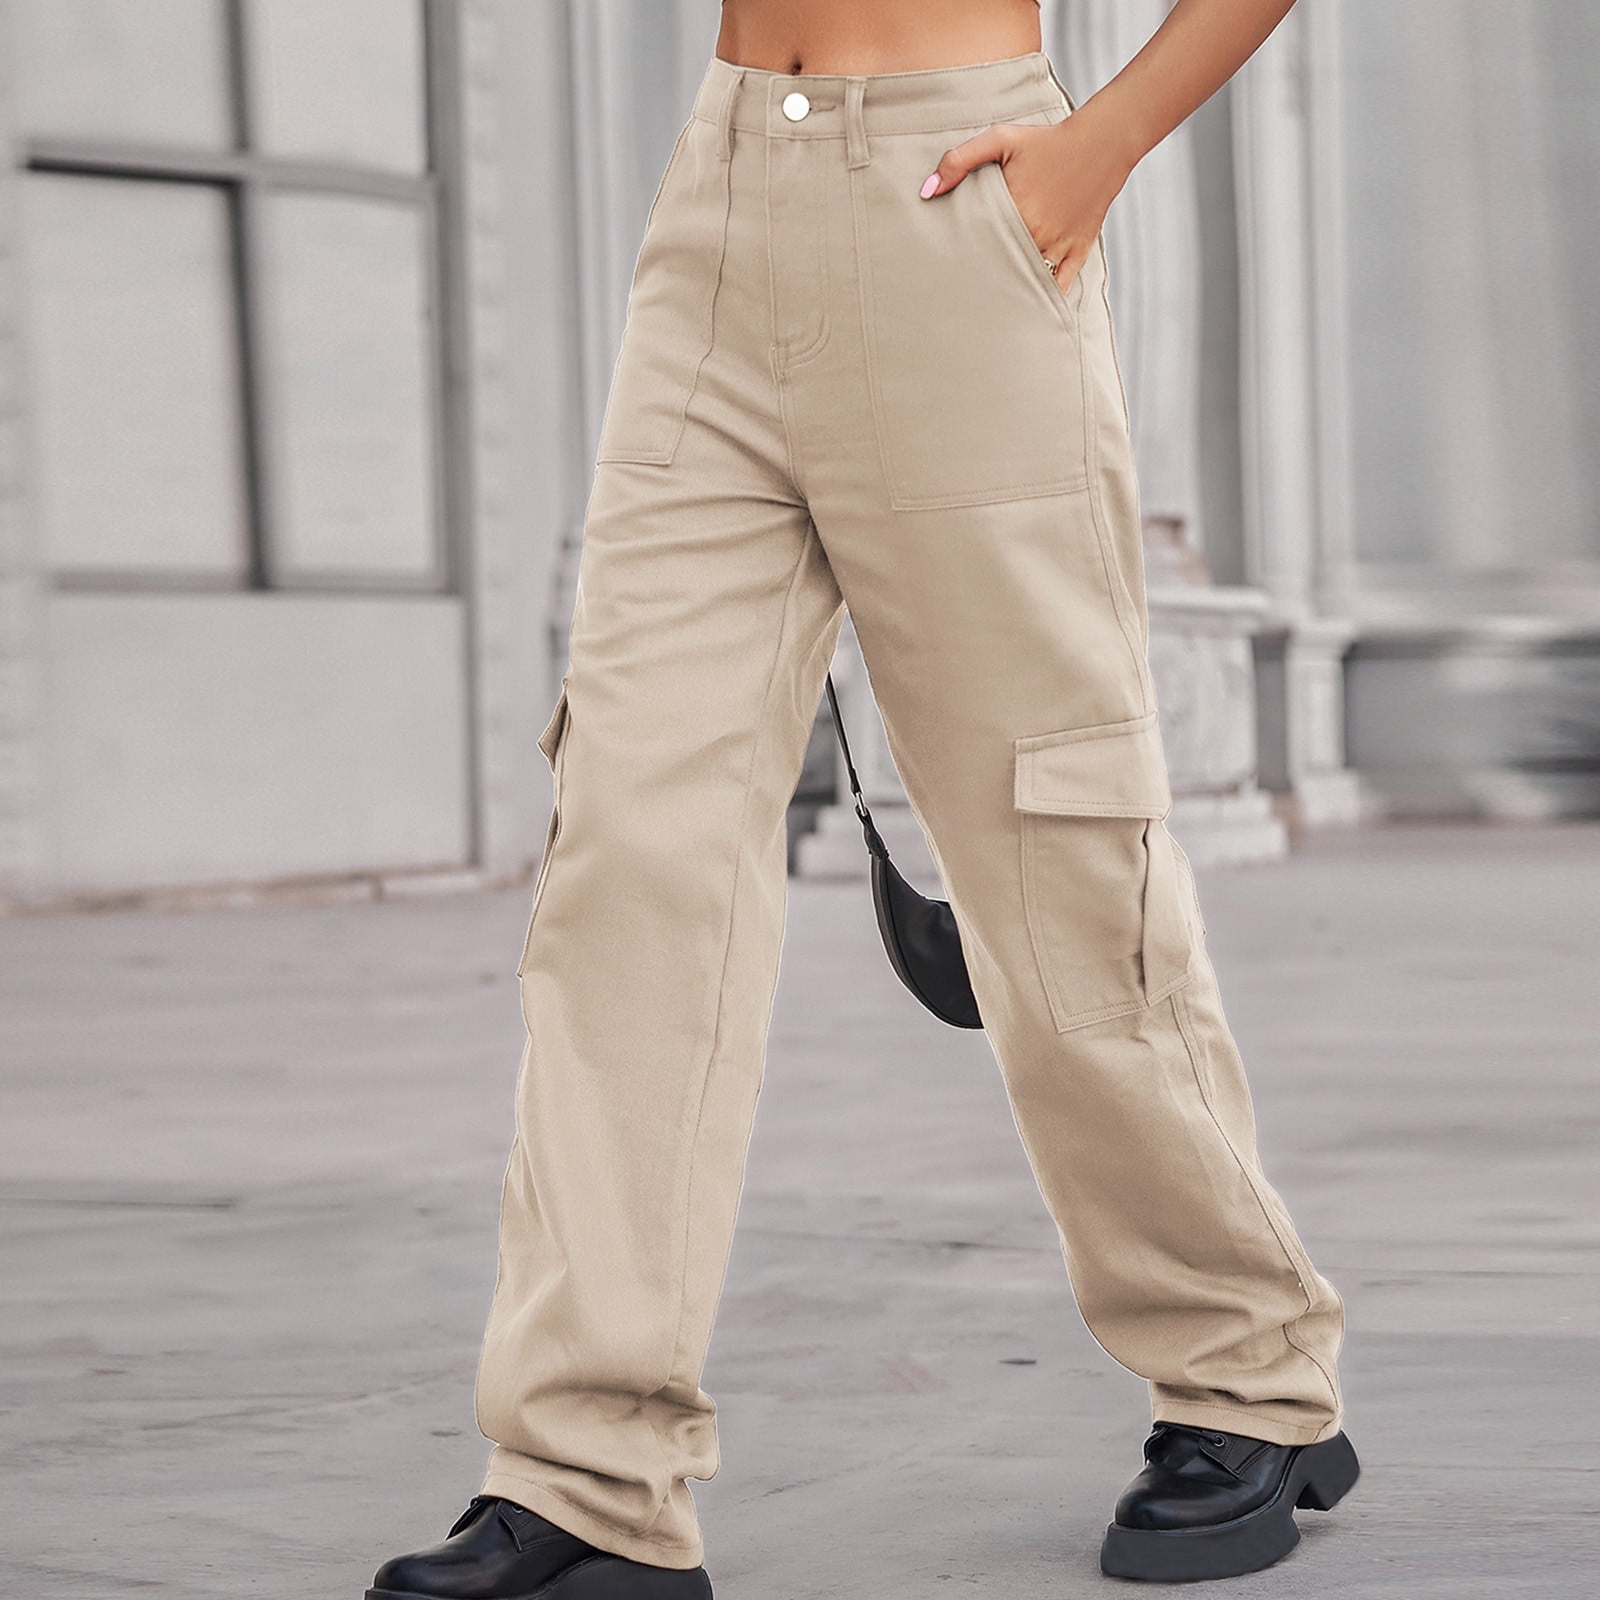 YWDJ Cargo Joggers for Women Women Casual Solid Cotton Linen Drawstring  Elastic Waist Calf Length Pencil Pants Gray XS